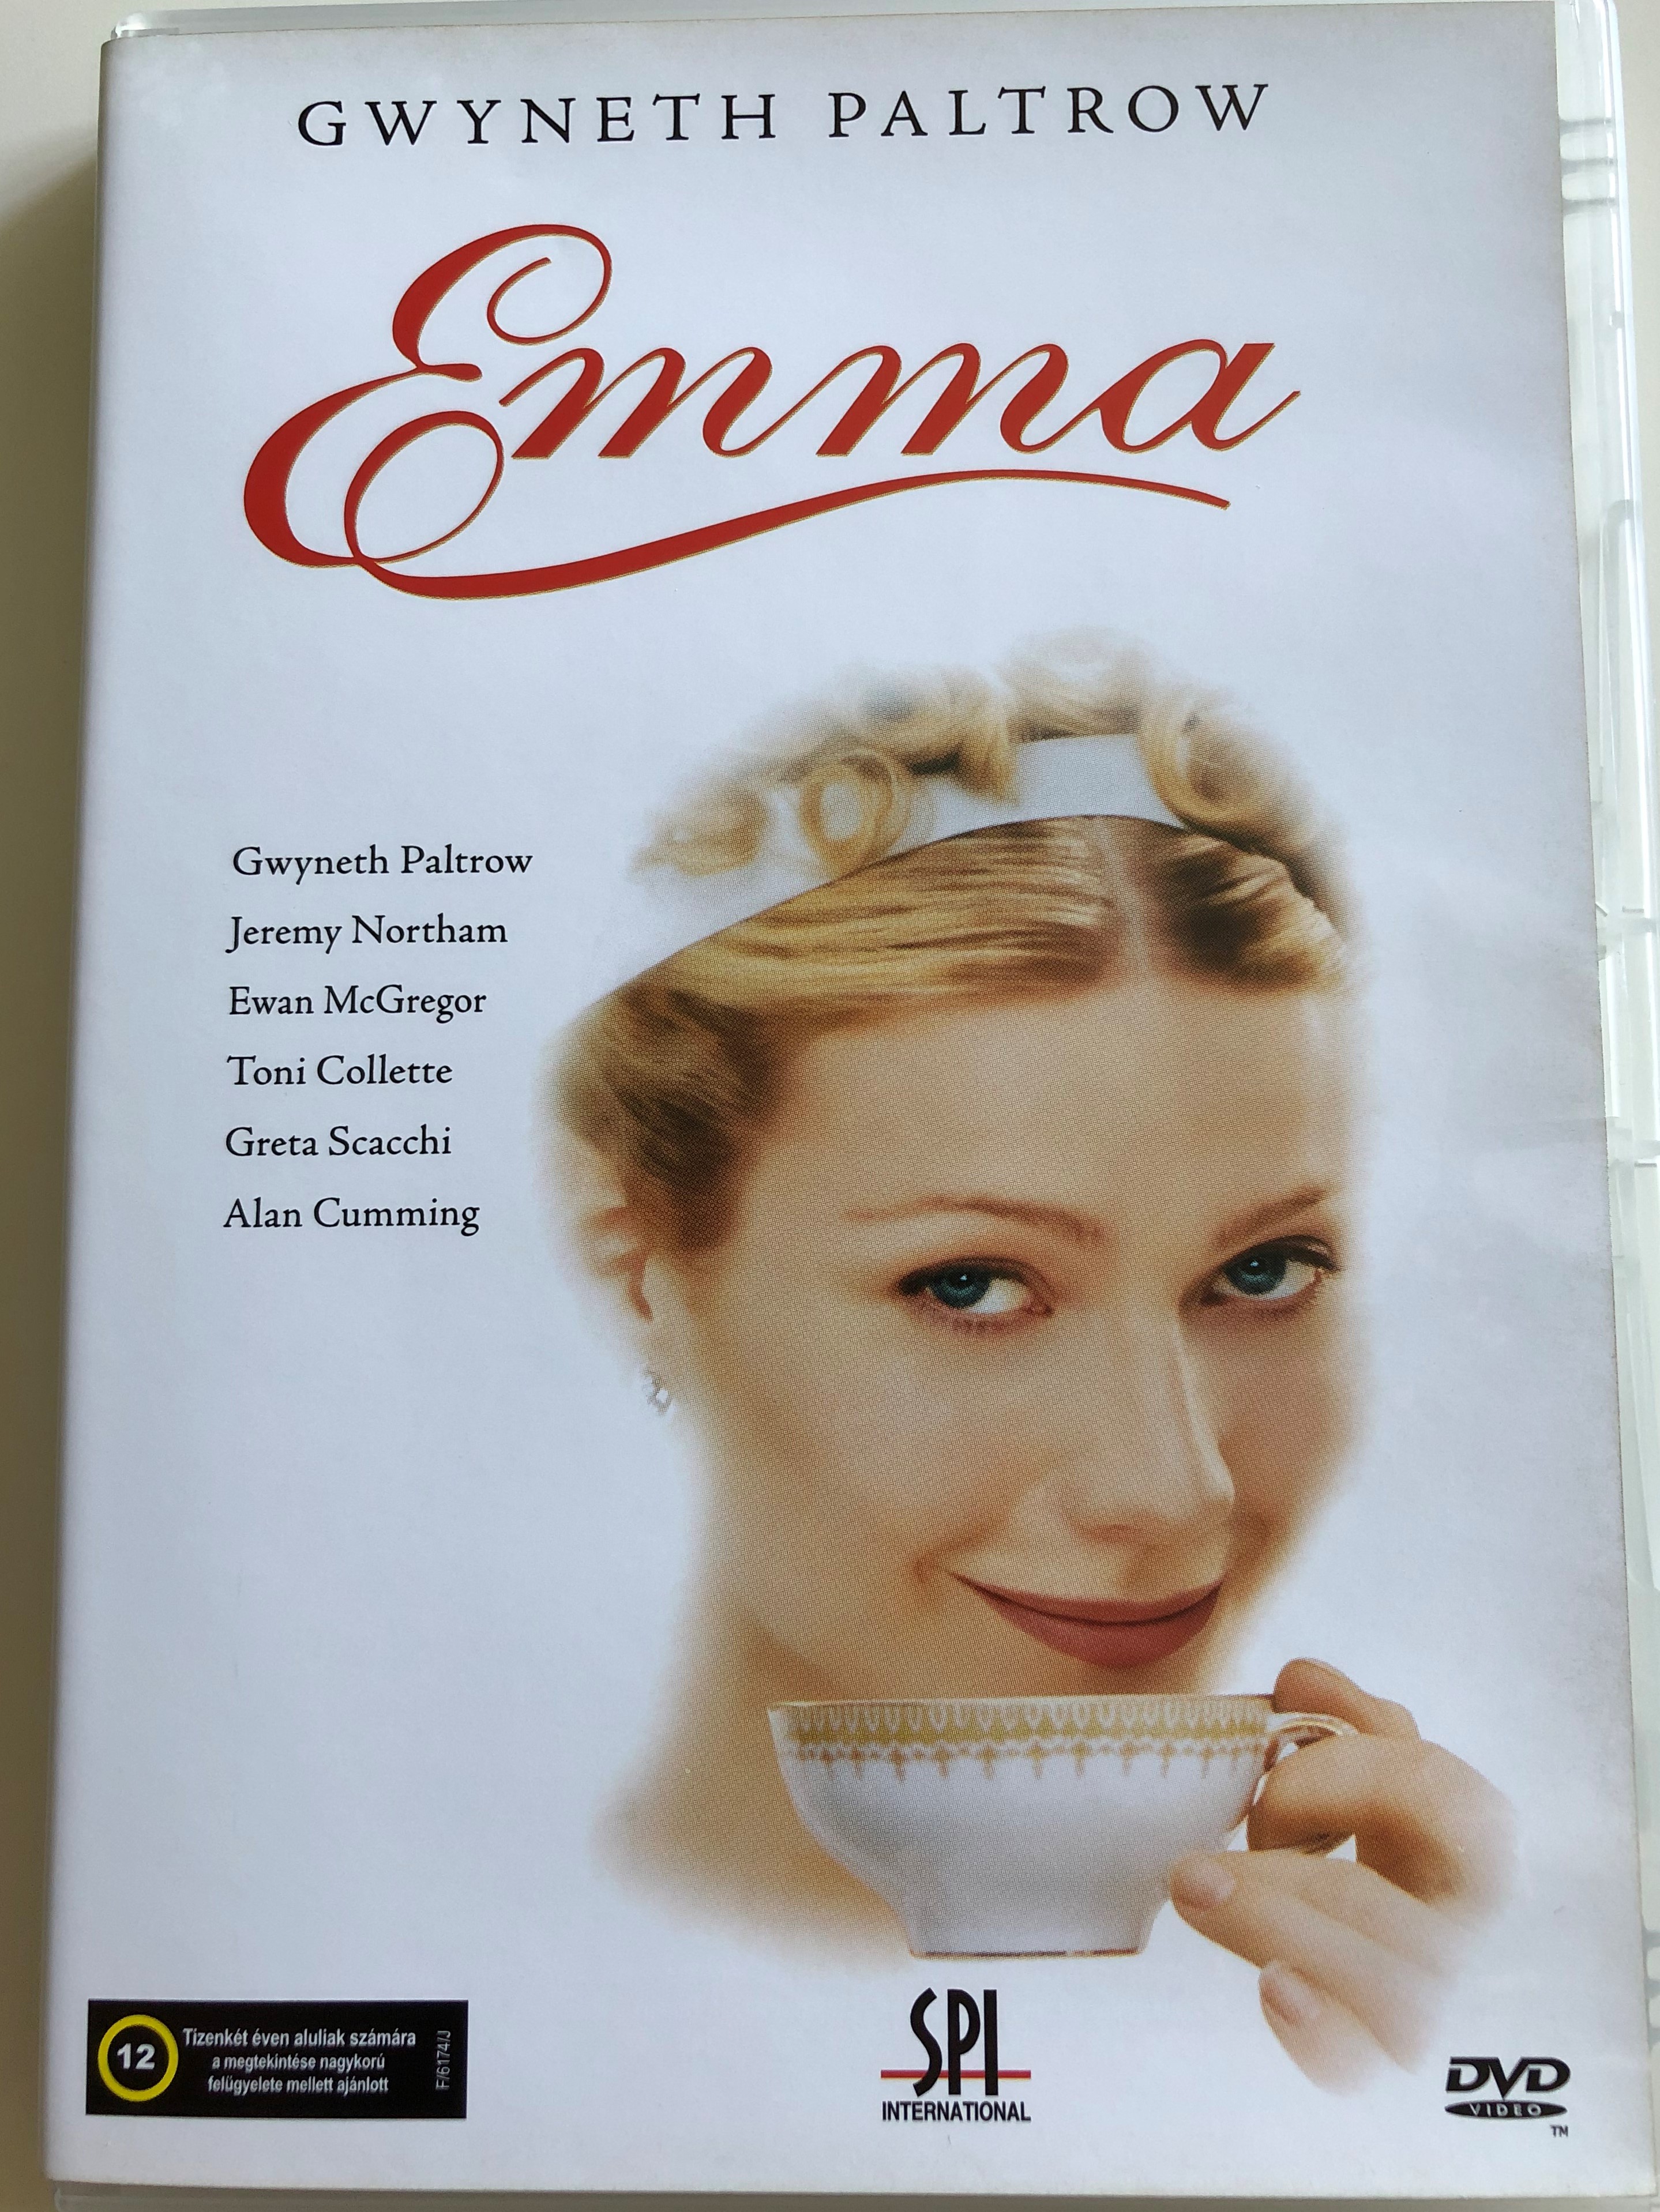 emma-dvd-1996-directed-by-douglas-mcgrath-starring-gwyneth-paltrow-toni-colette-alan-cumming-ewan-mcgregor-jeremy-northam-greta-scacchi-based-on-the-novel-by-jane-austen-1-.jpg